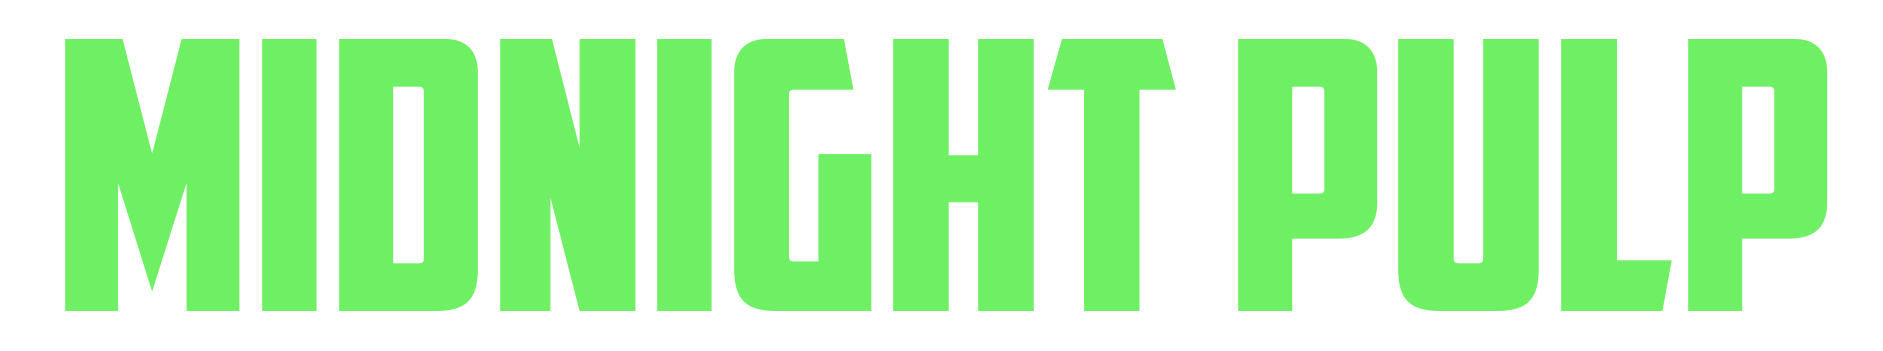 cineverse logo